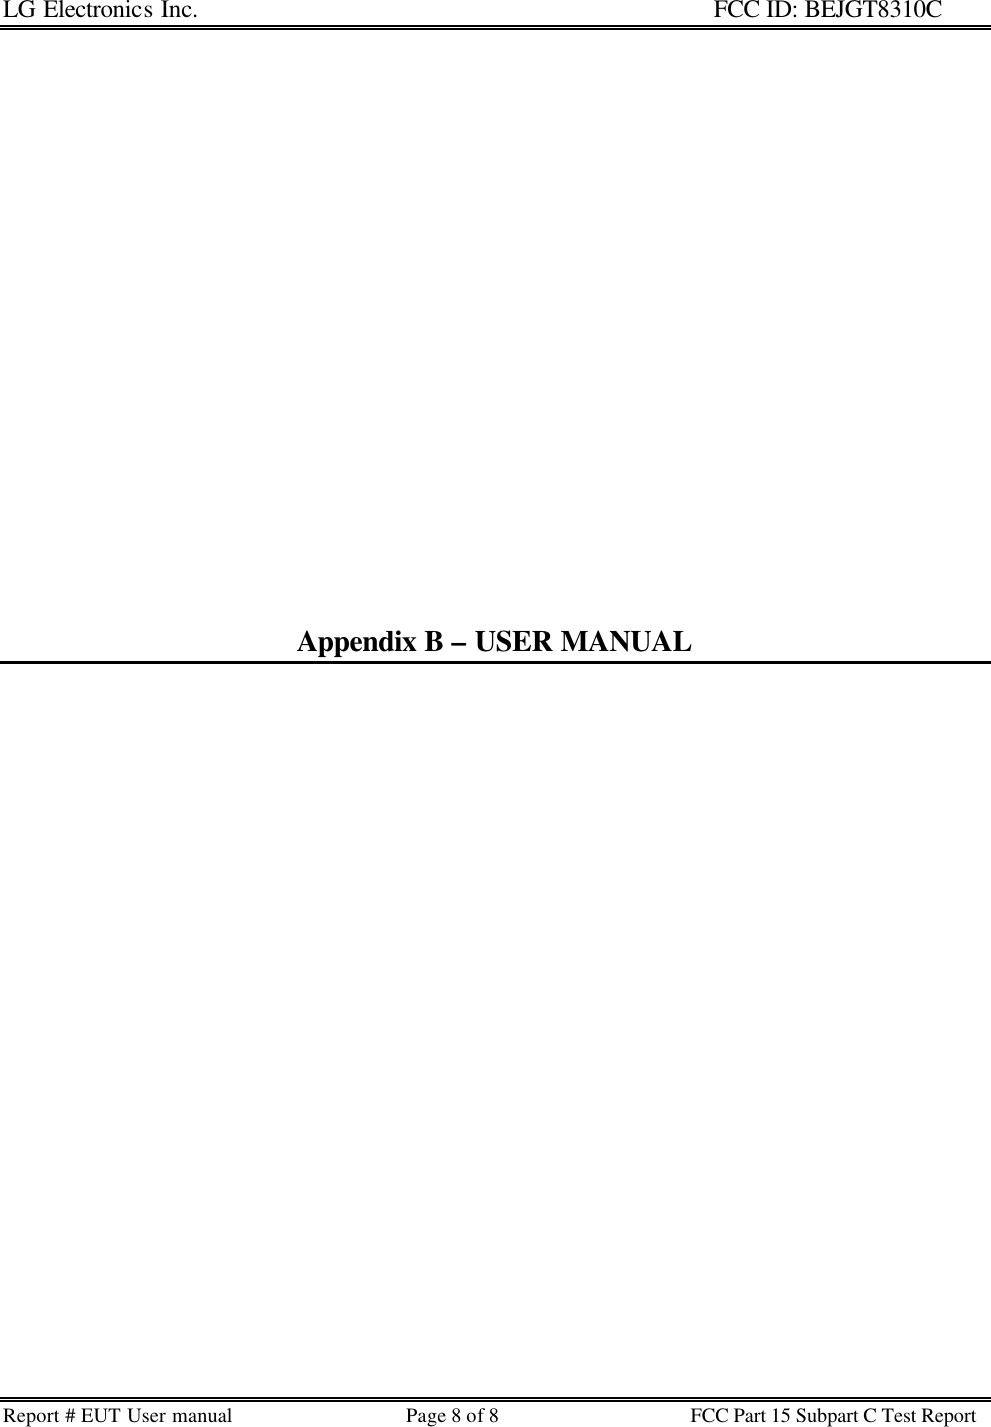 LG Electronics Inc.                                                                                                   FCC ID: BEJGT8310C Report # EUT User manual Page 8 of 8 FCC Part 15 Subpart C Test Report                            Appendix B – USER MANUAL    